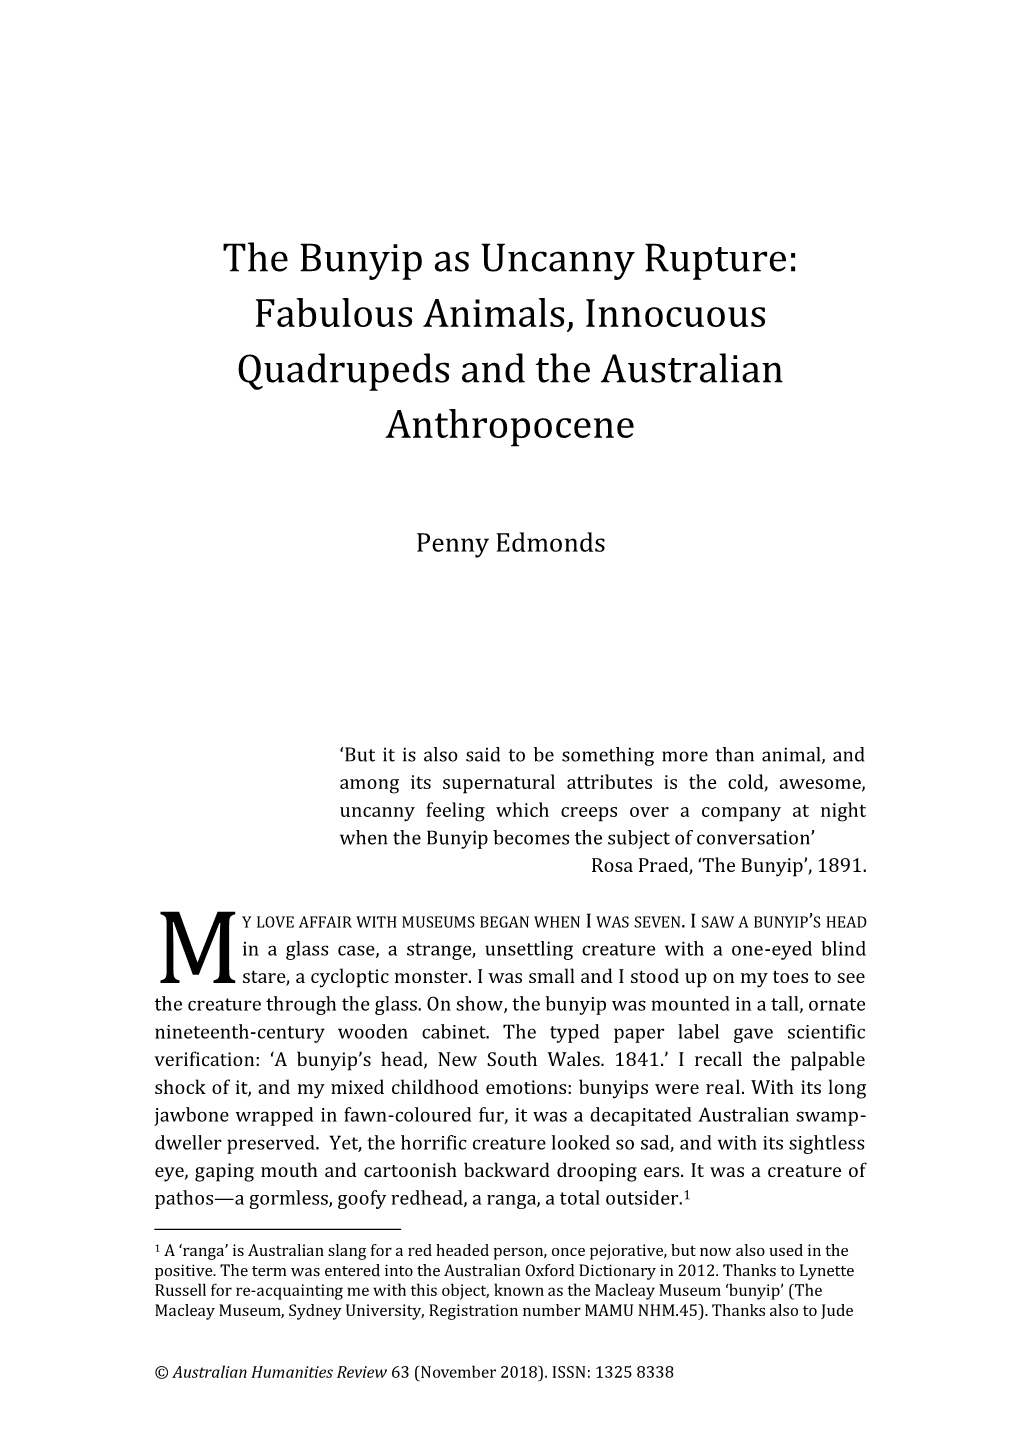 The Bunyip As Uncanny Rupture: Fabulous Animals, Innocuous Quadrupeds and the Australian Anthropocene